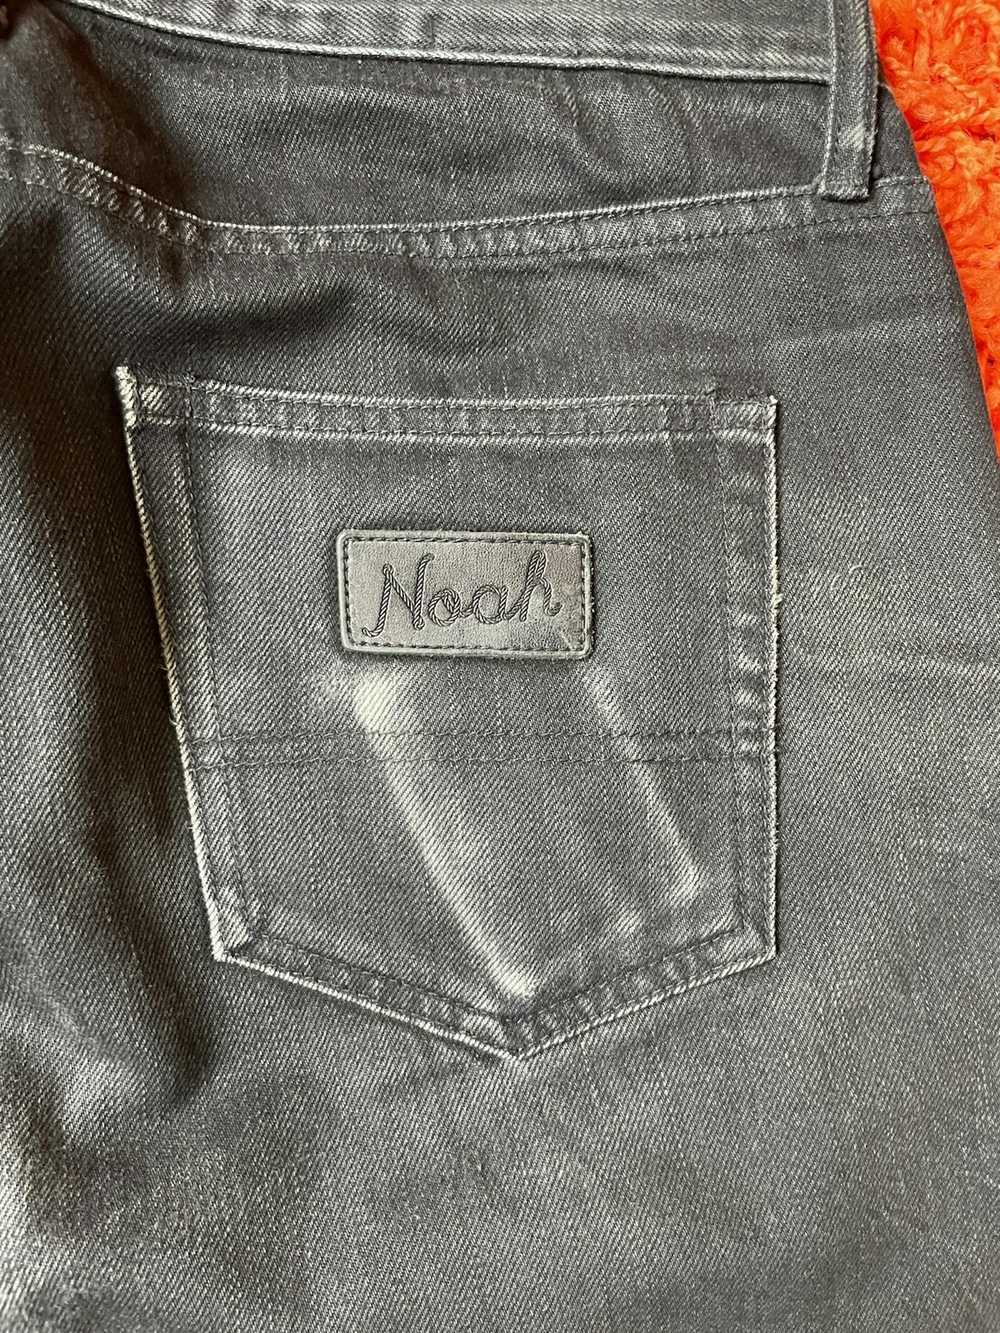 Noah Noah 5 Pocket Denim Jeans - image 5